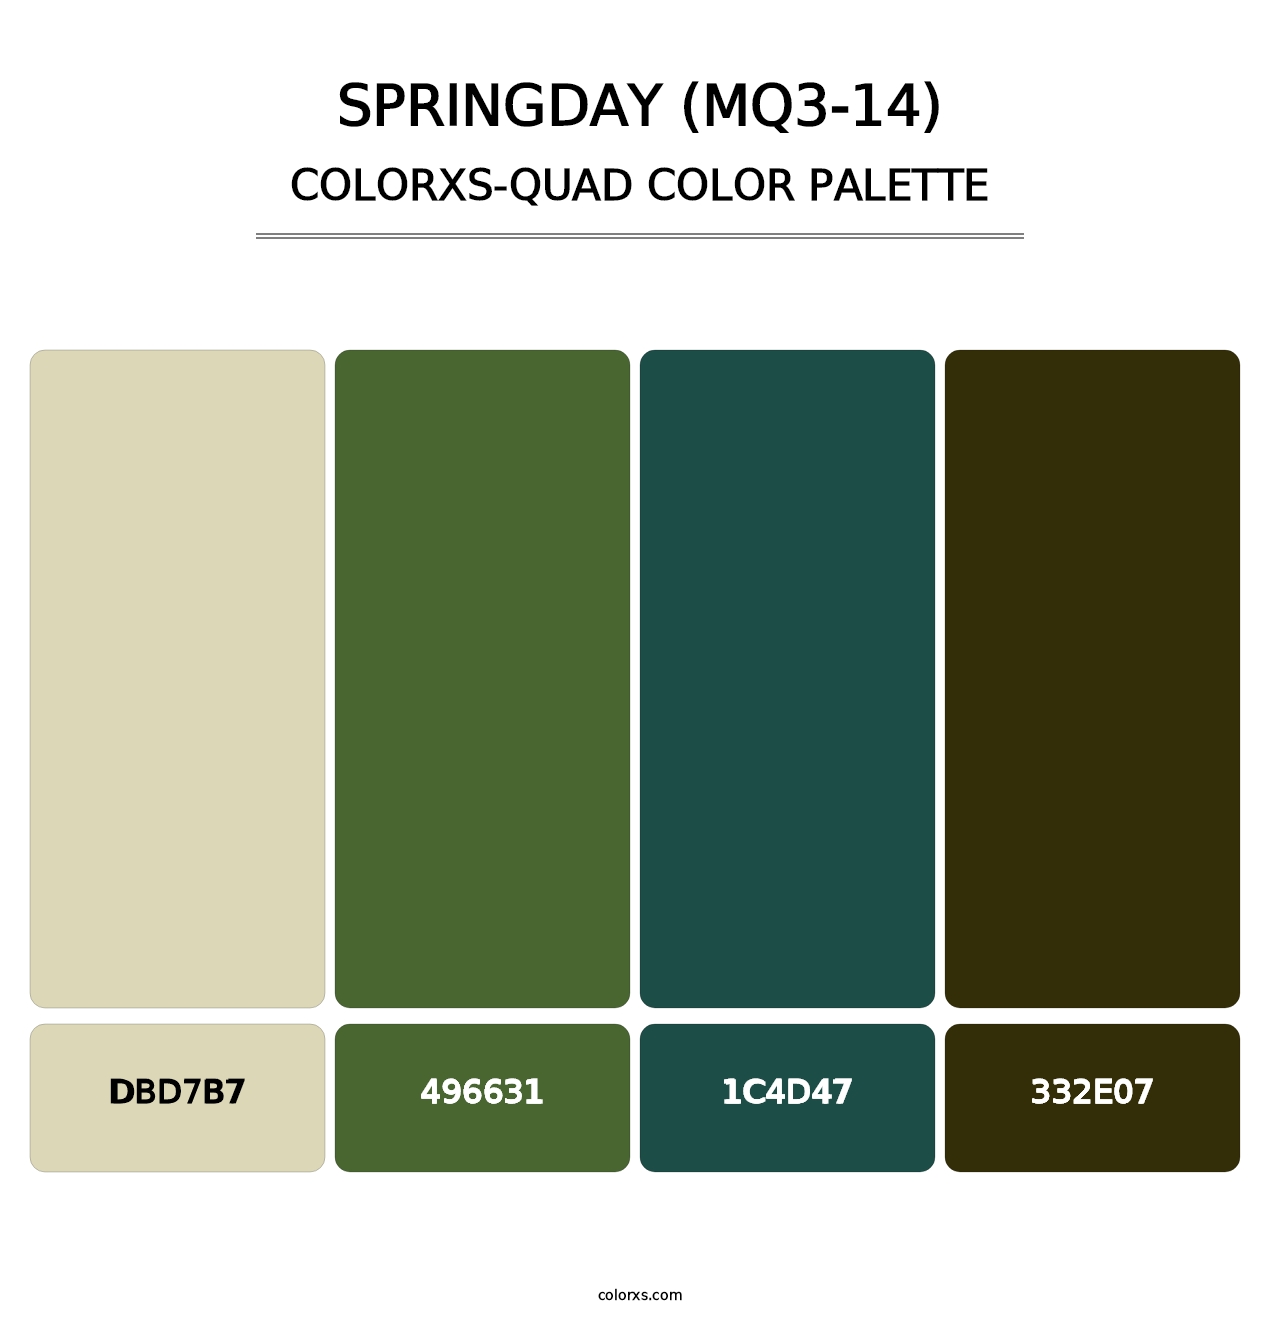 Springday (MQ3-14) - Colorxs Quad Palette